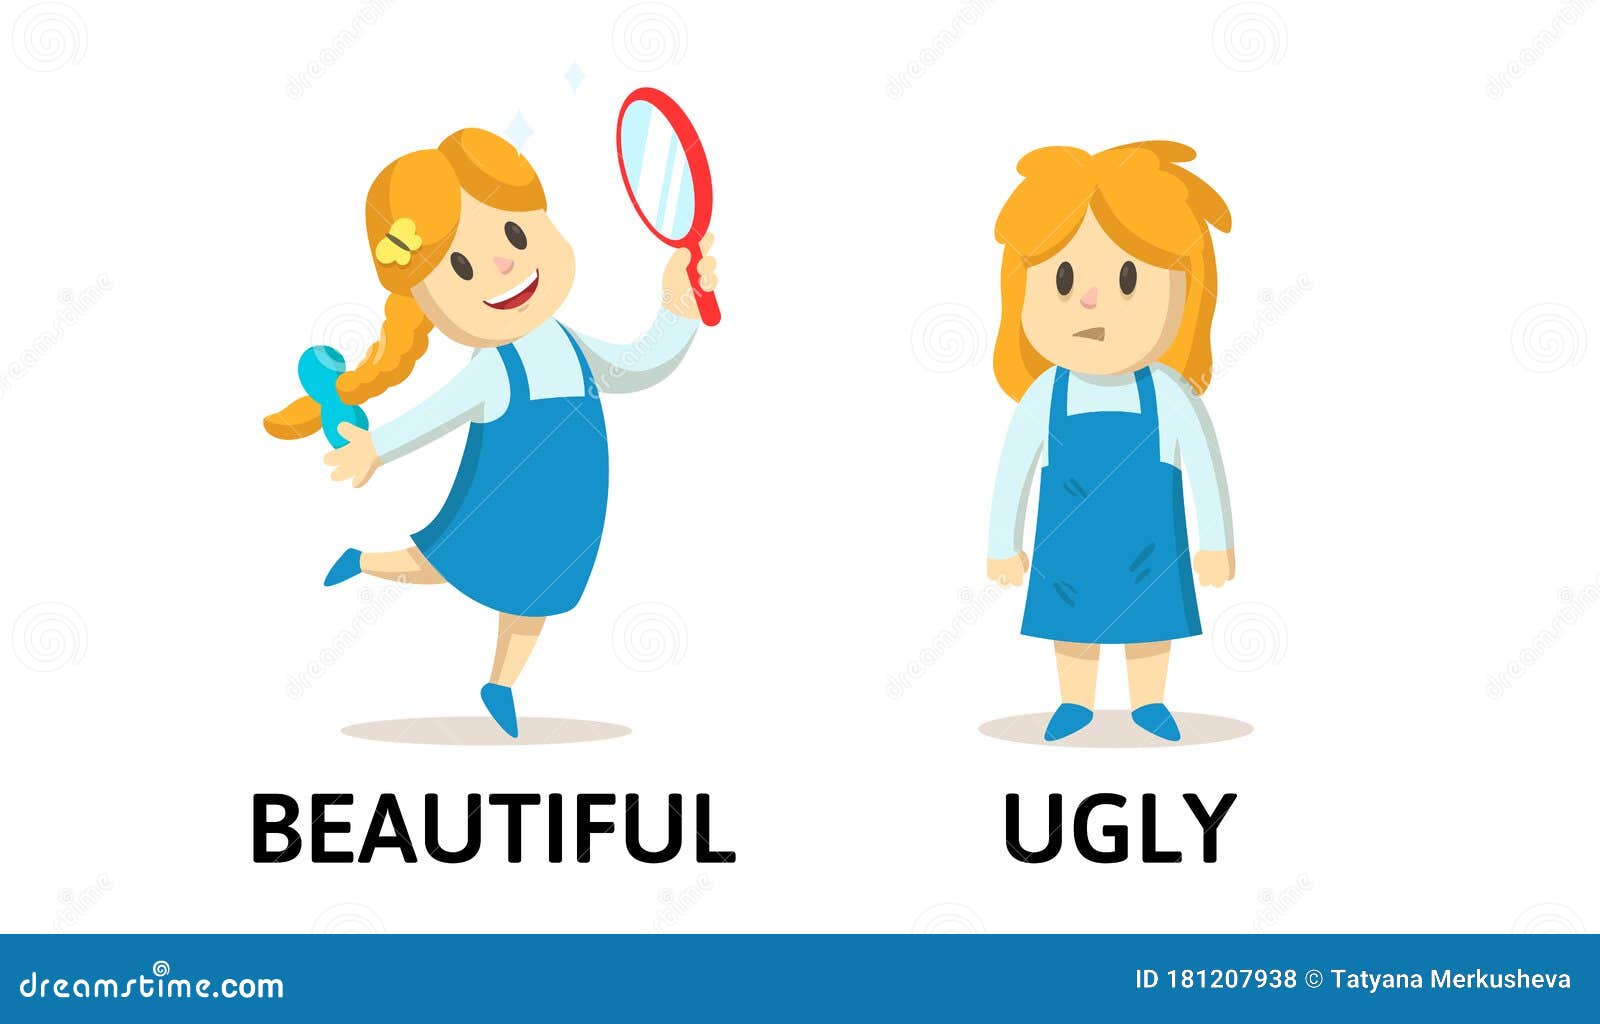 Am beautiful ugly. Beautiful ugly. Ugly картинка для детей. Pretty ugly. Beautiful ugly картинки для детей.